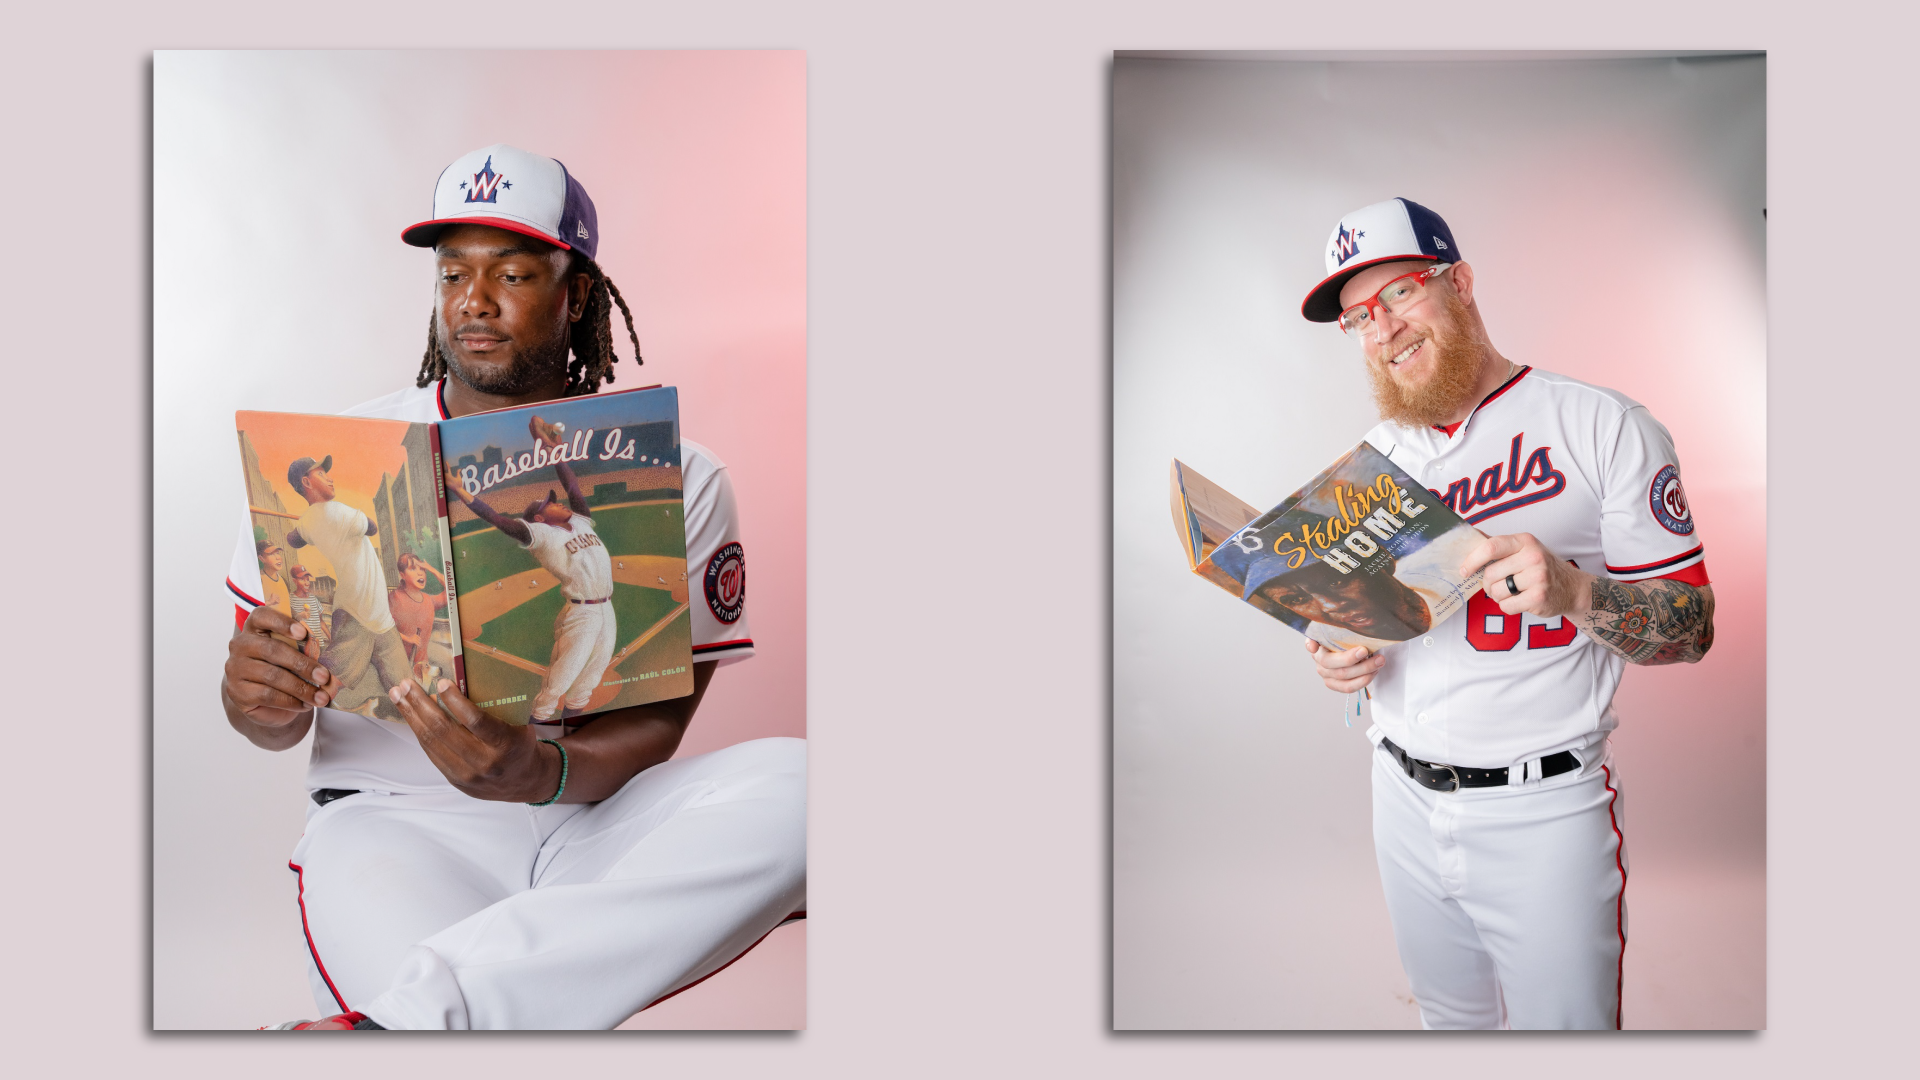 Two men wearing baseball uniforms hold up children's books